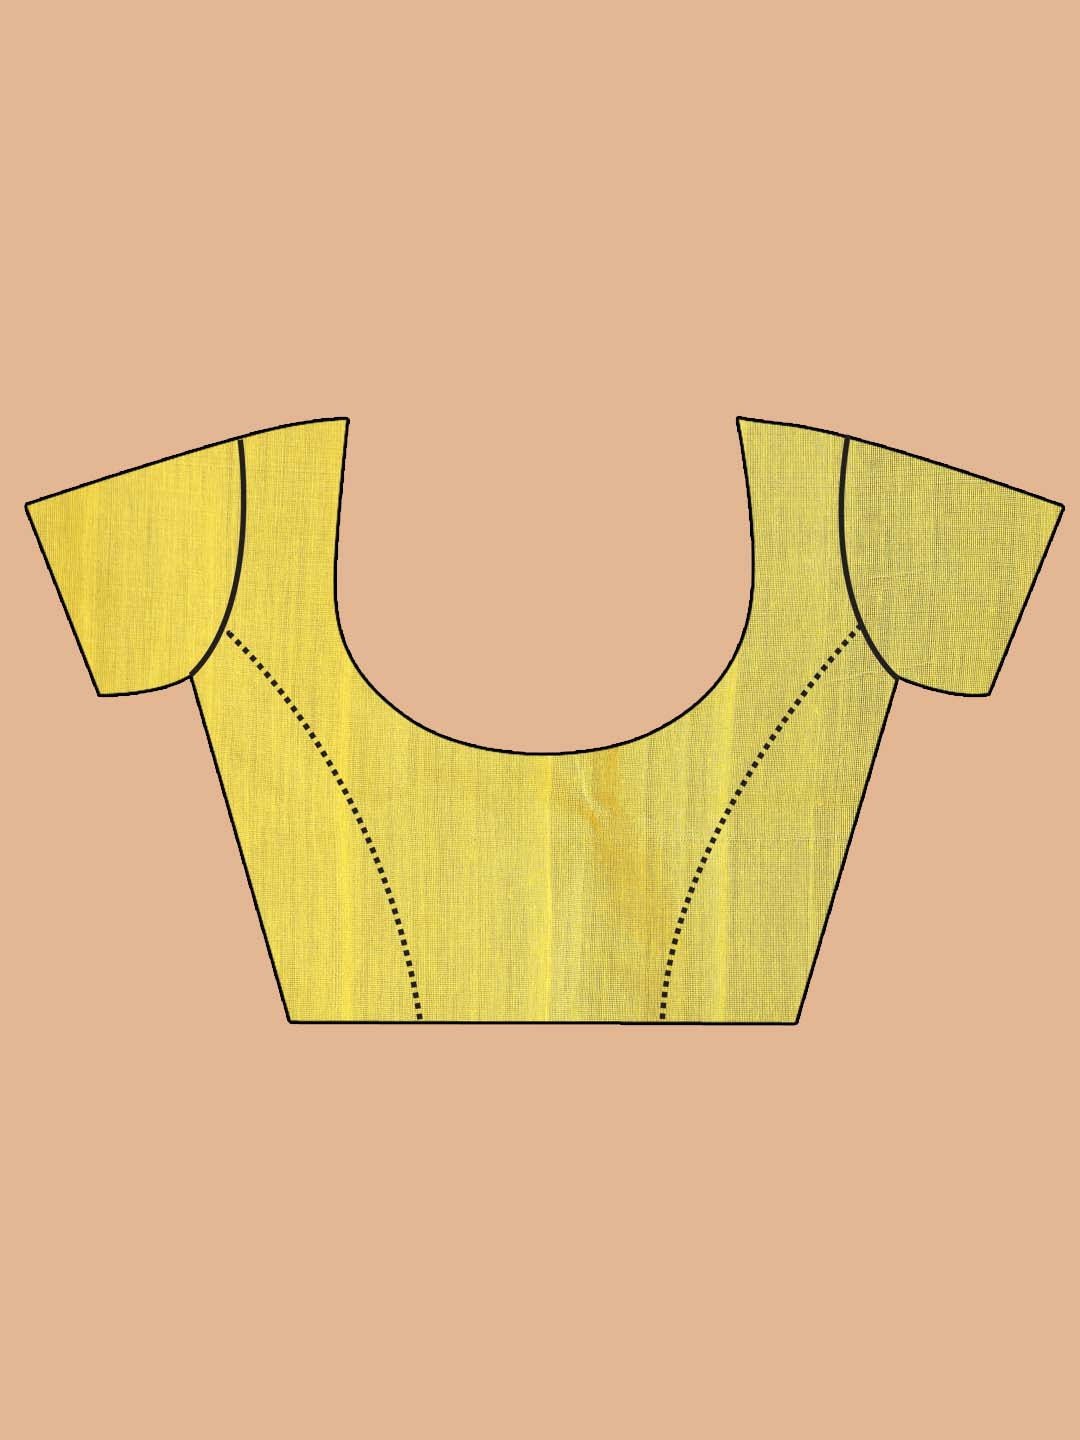 Indethnic Yellow Bengal Handloom Cotton Blend Work Saree - Blouse Piece View